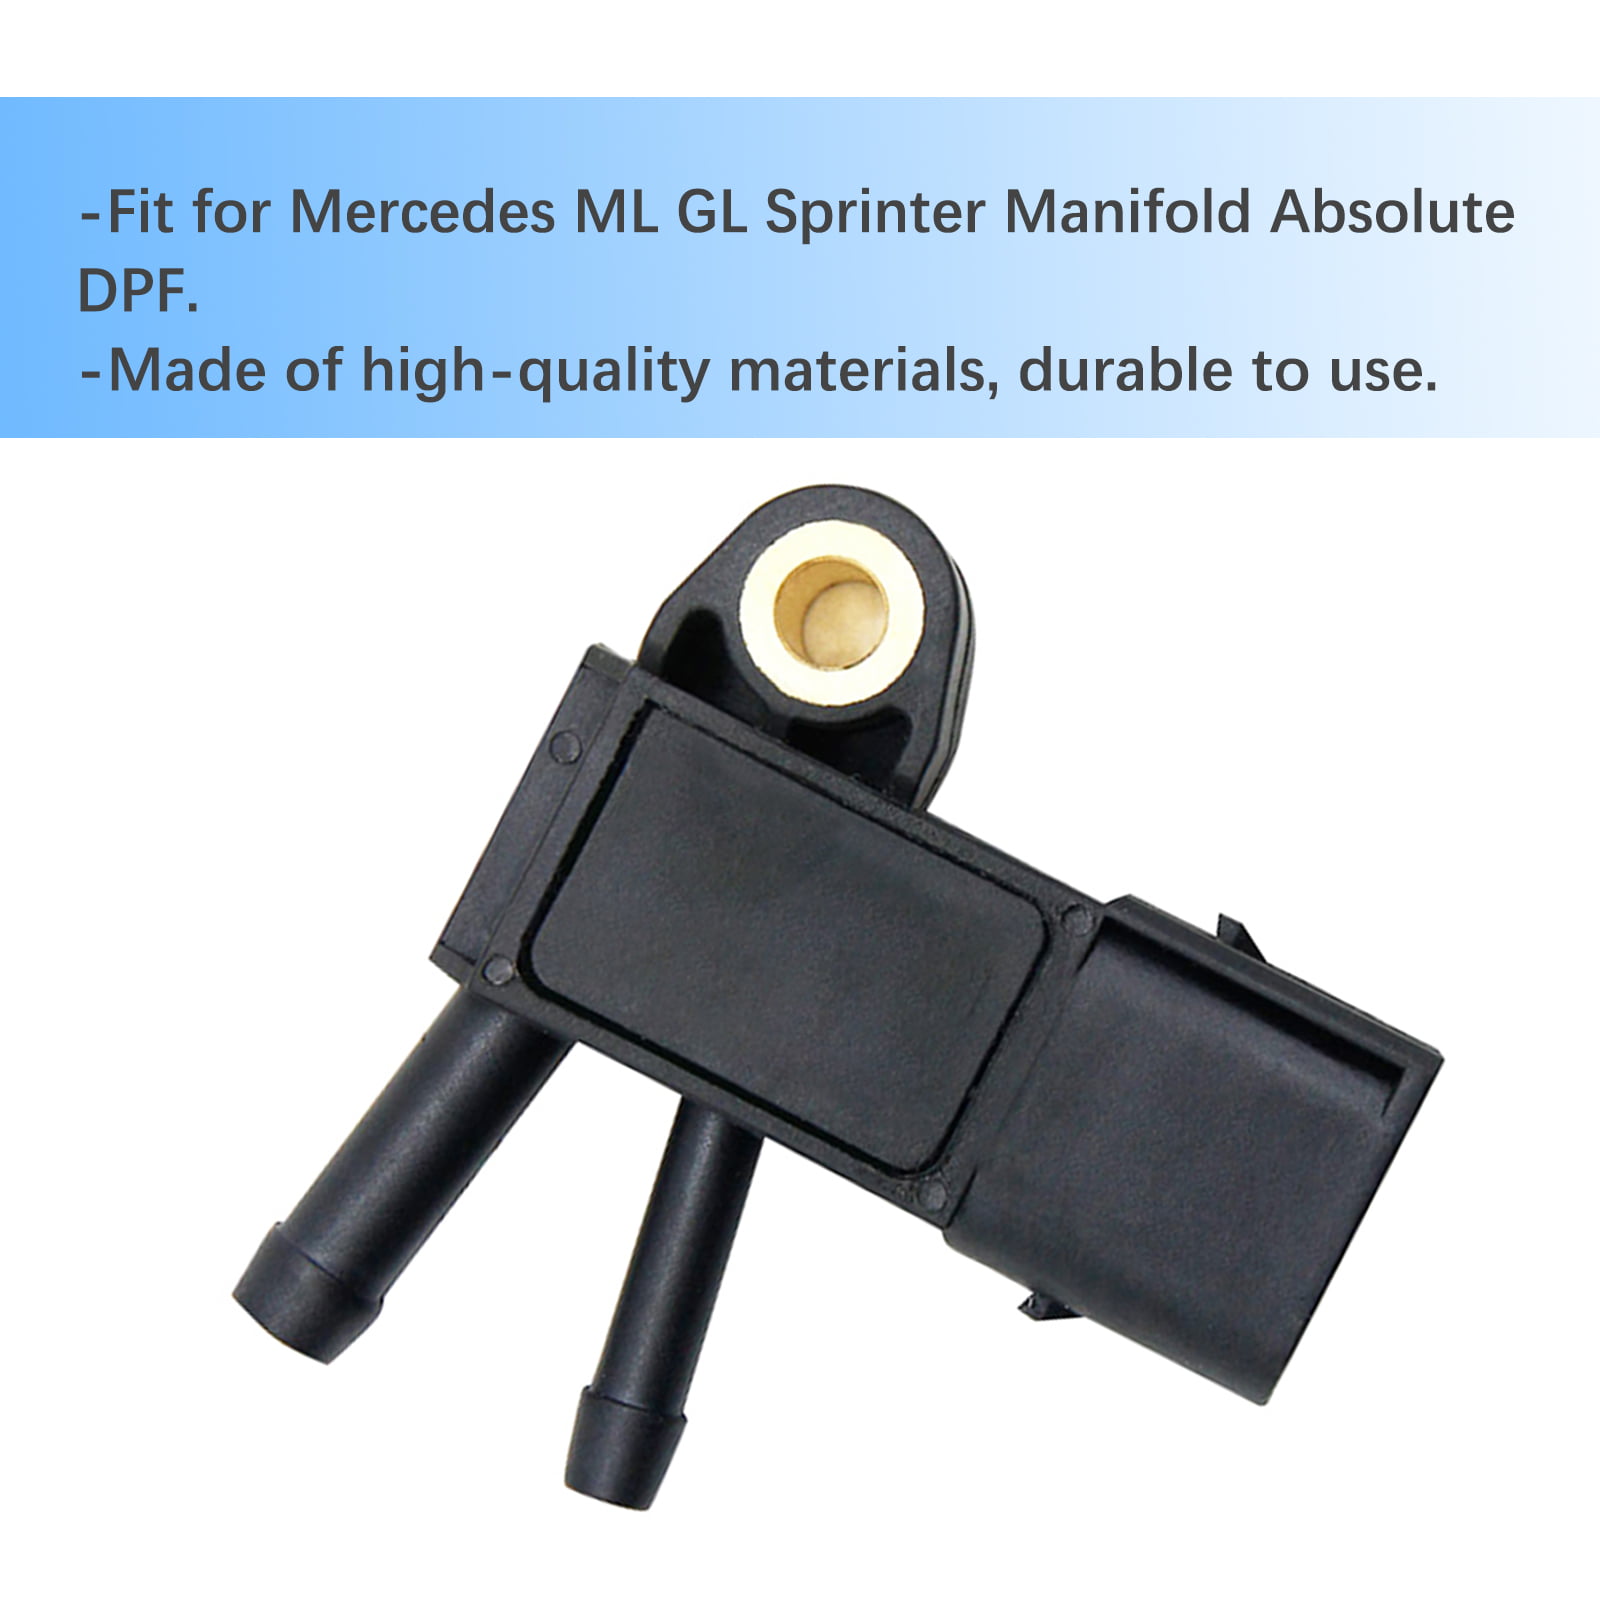 For Mercedes ML GL Sprinter Manifold Absolute DPF Differential Pressure Sensor